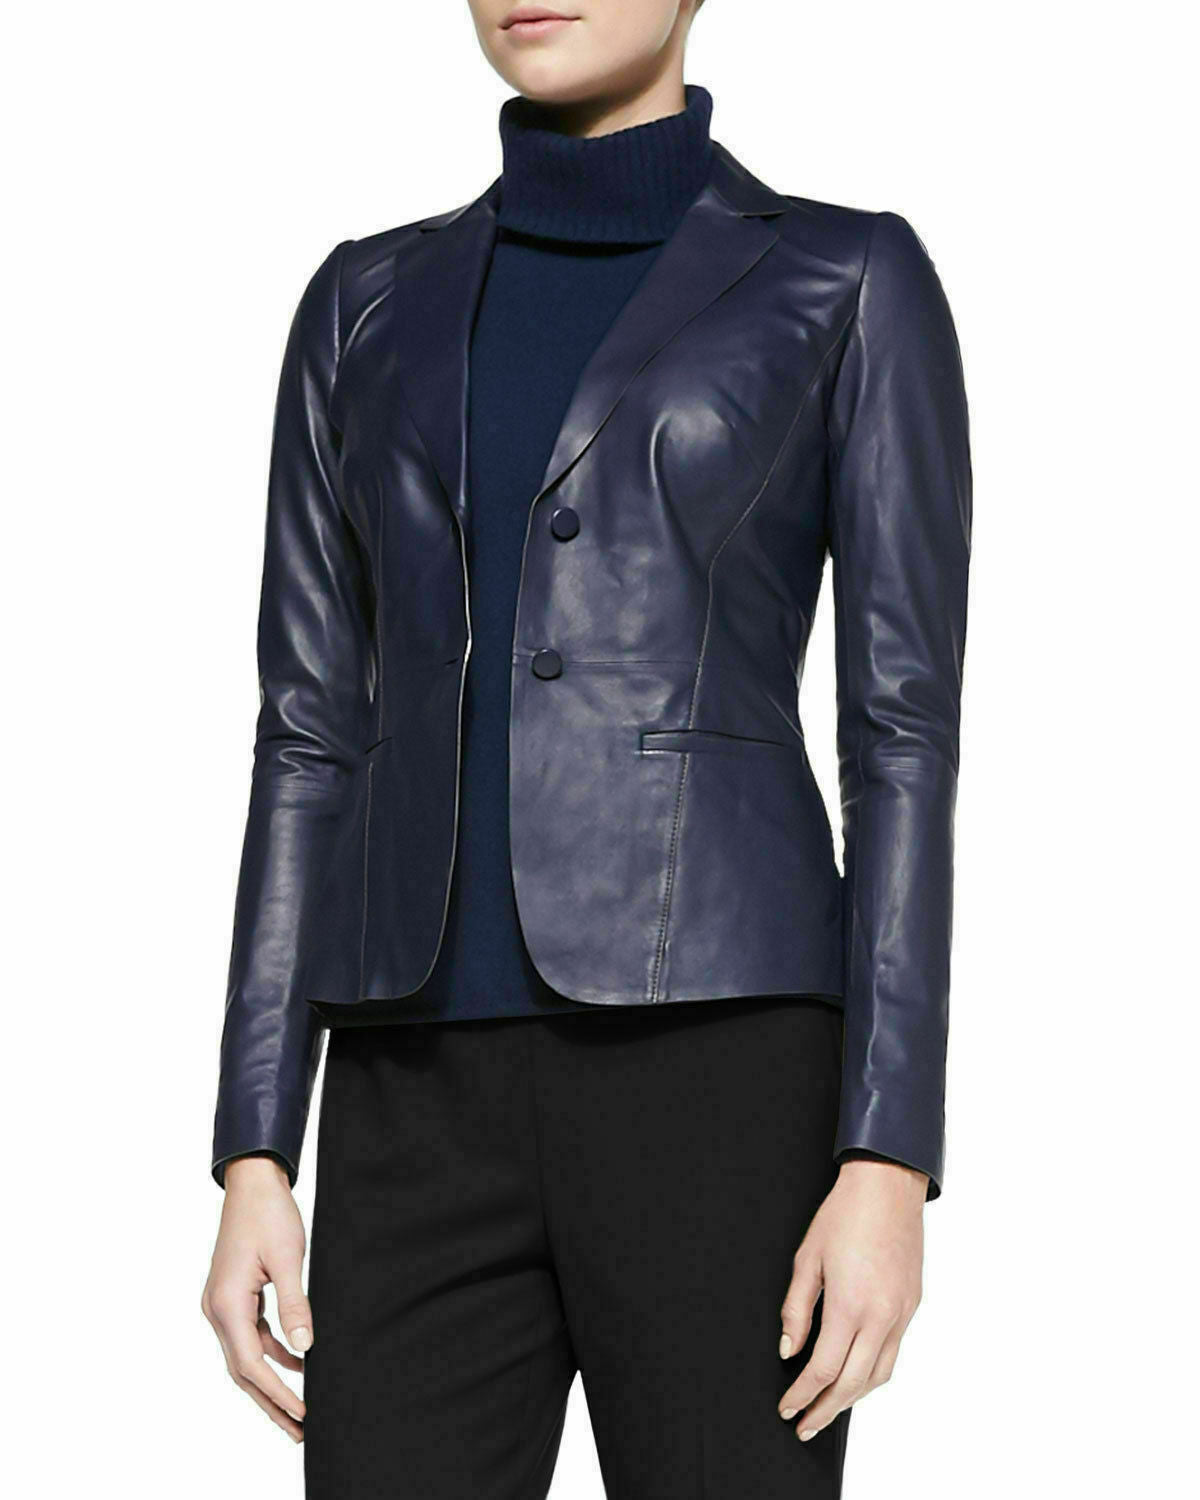 Black Leather Blazer Jacket | Blazer Jacket | Noora International